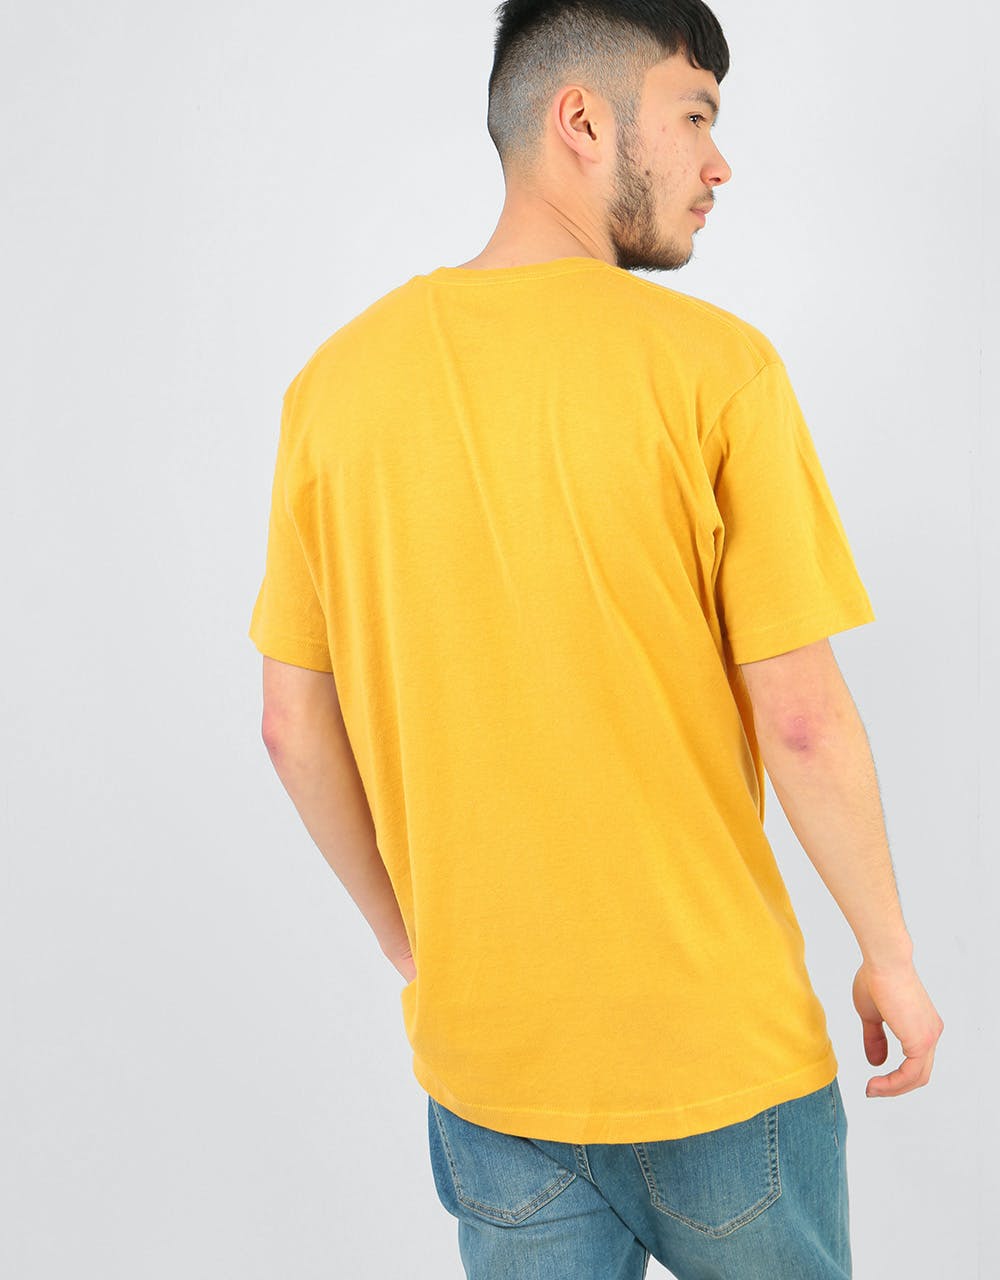 Krooked Sweatpants T-Shirt - Mustard